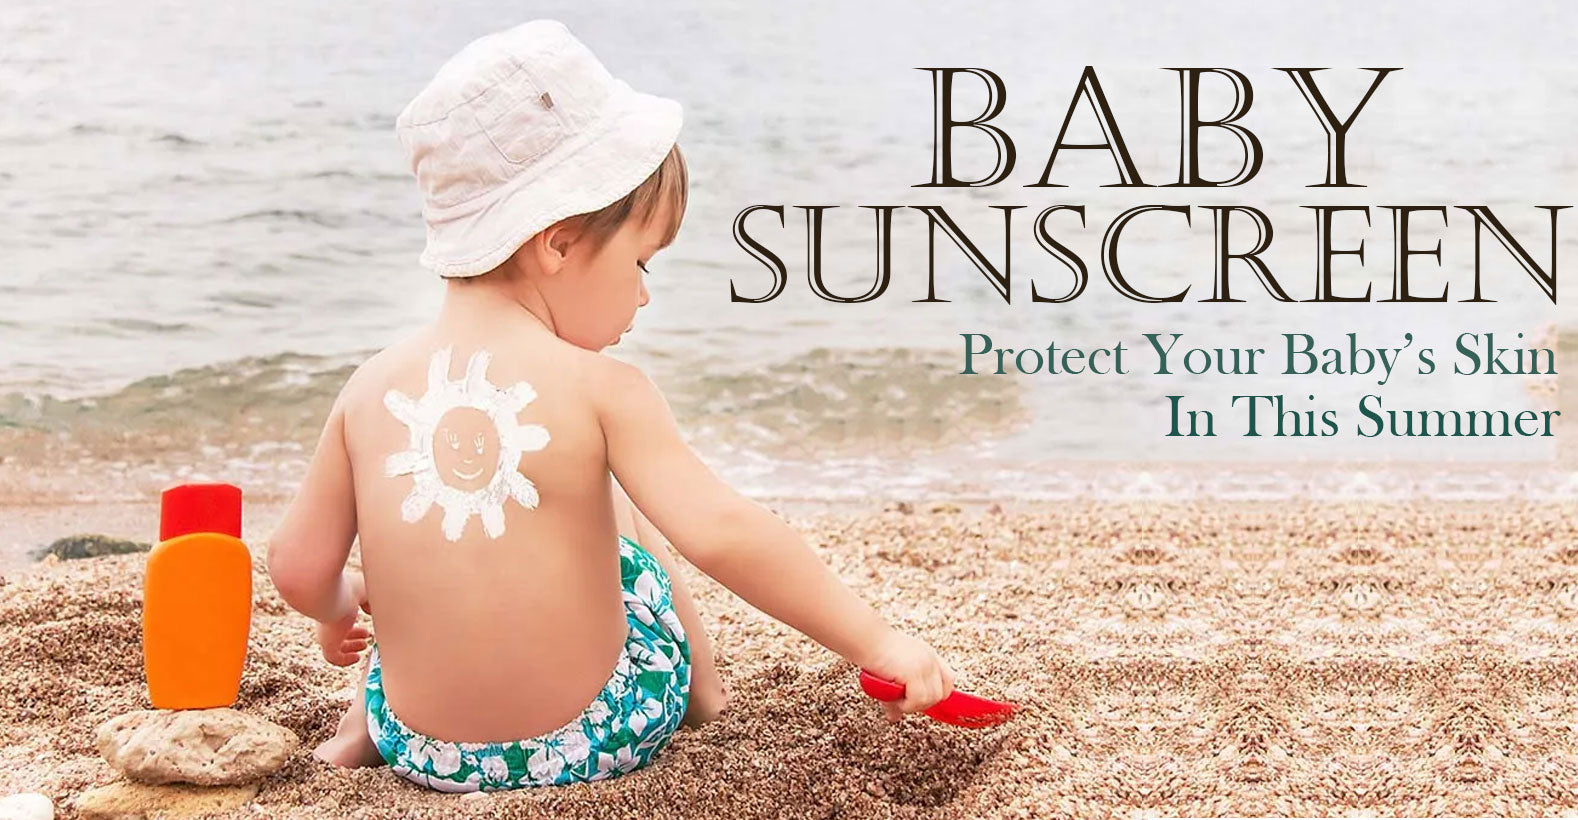 Baby Sunscreen Tips 